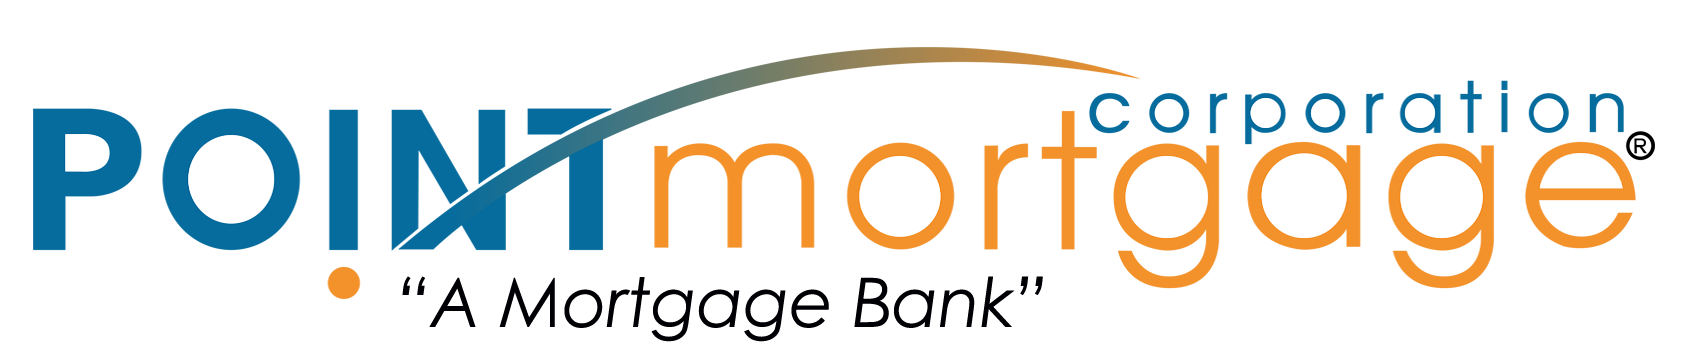 Point Mortgage Corporation Company Logo